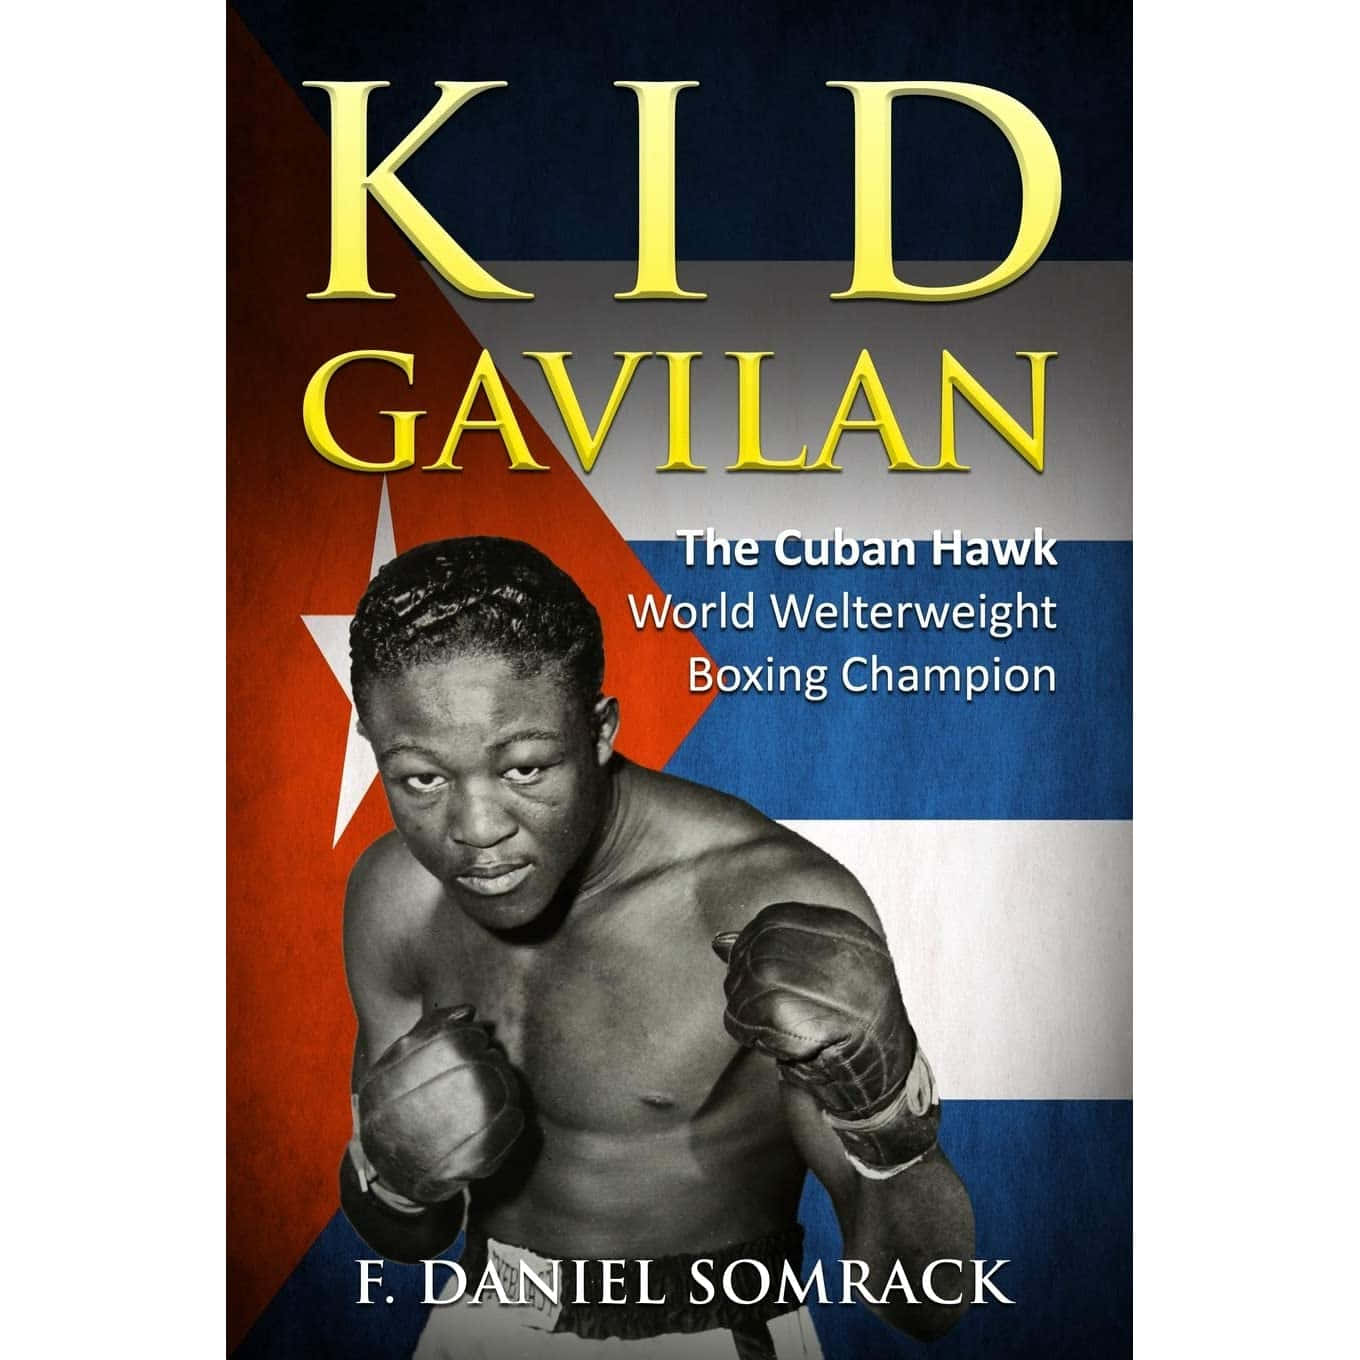 Kid Gavilan - The Cuban Hawk in Action Wallpaper